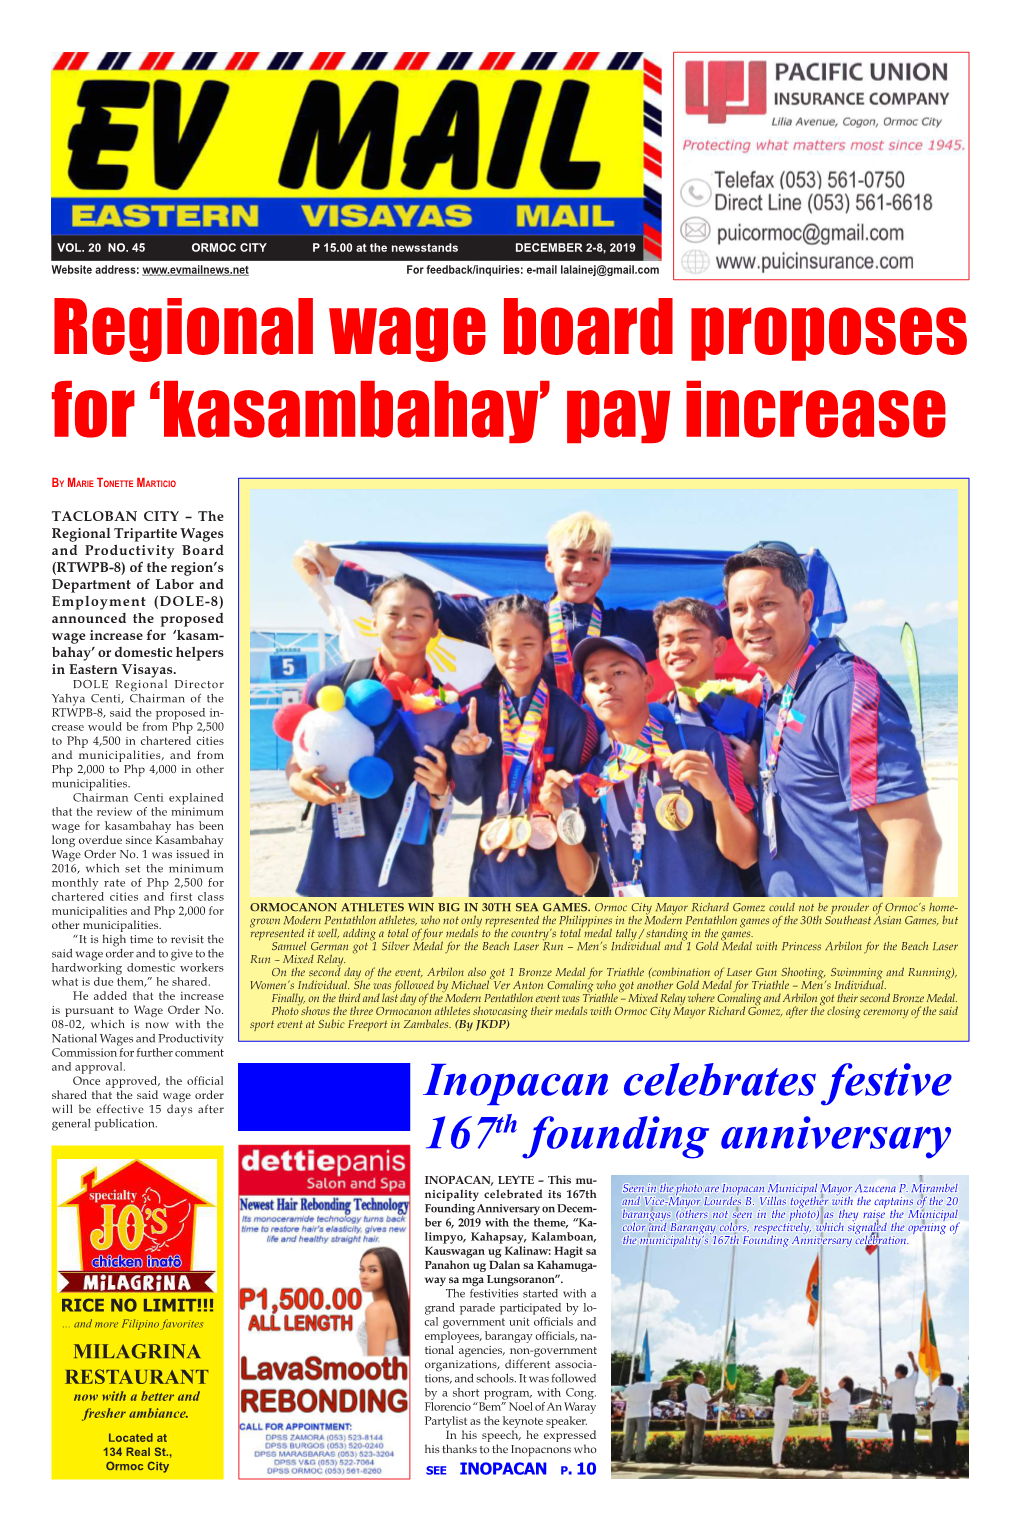 Regional Wage Board Proposes for 'Kasambahay'